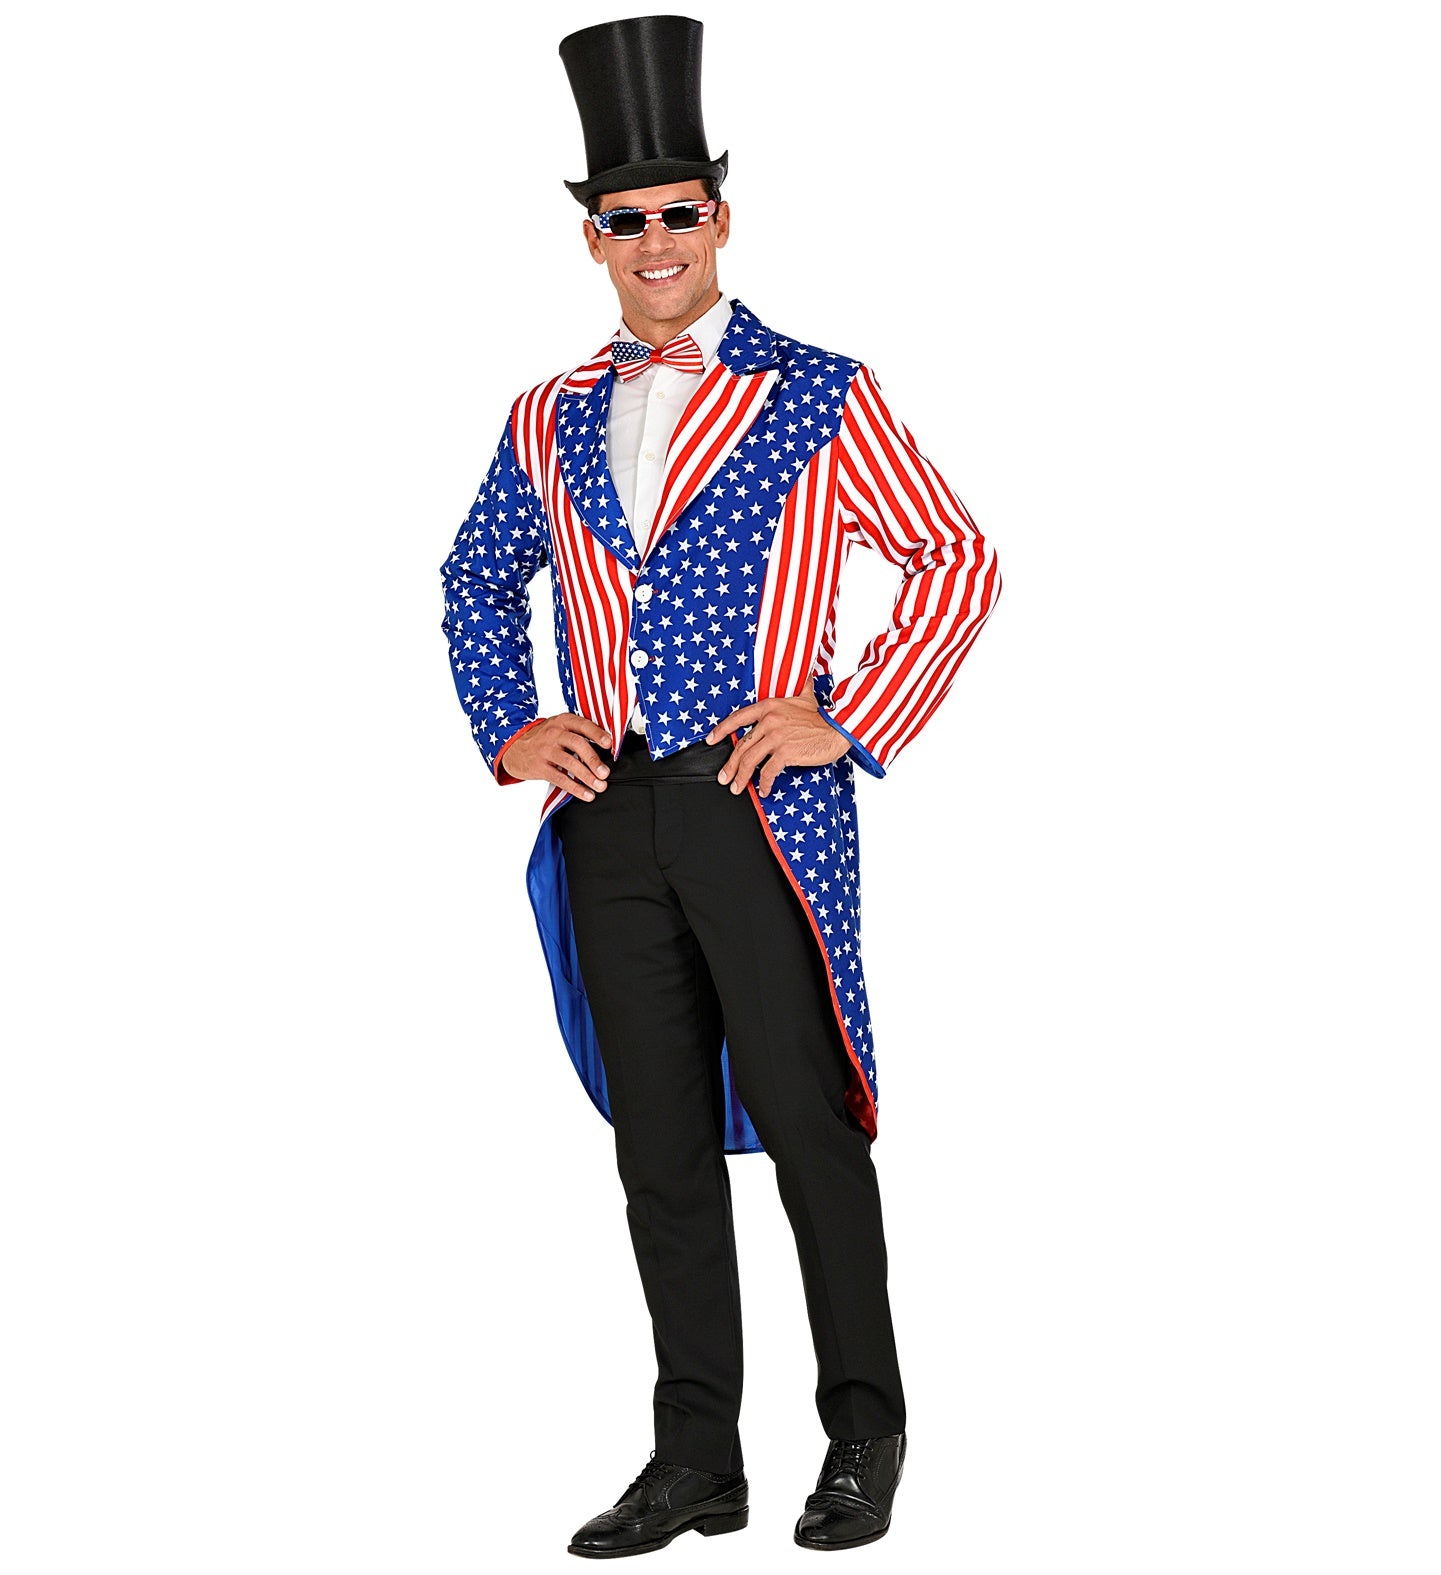 USA Tailcoat Men's costume